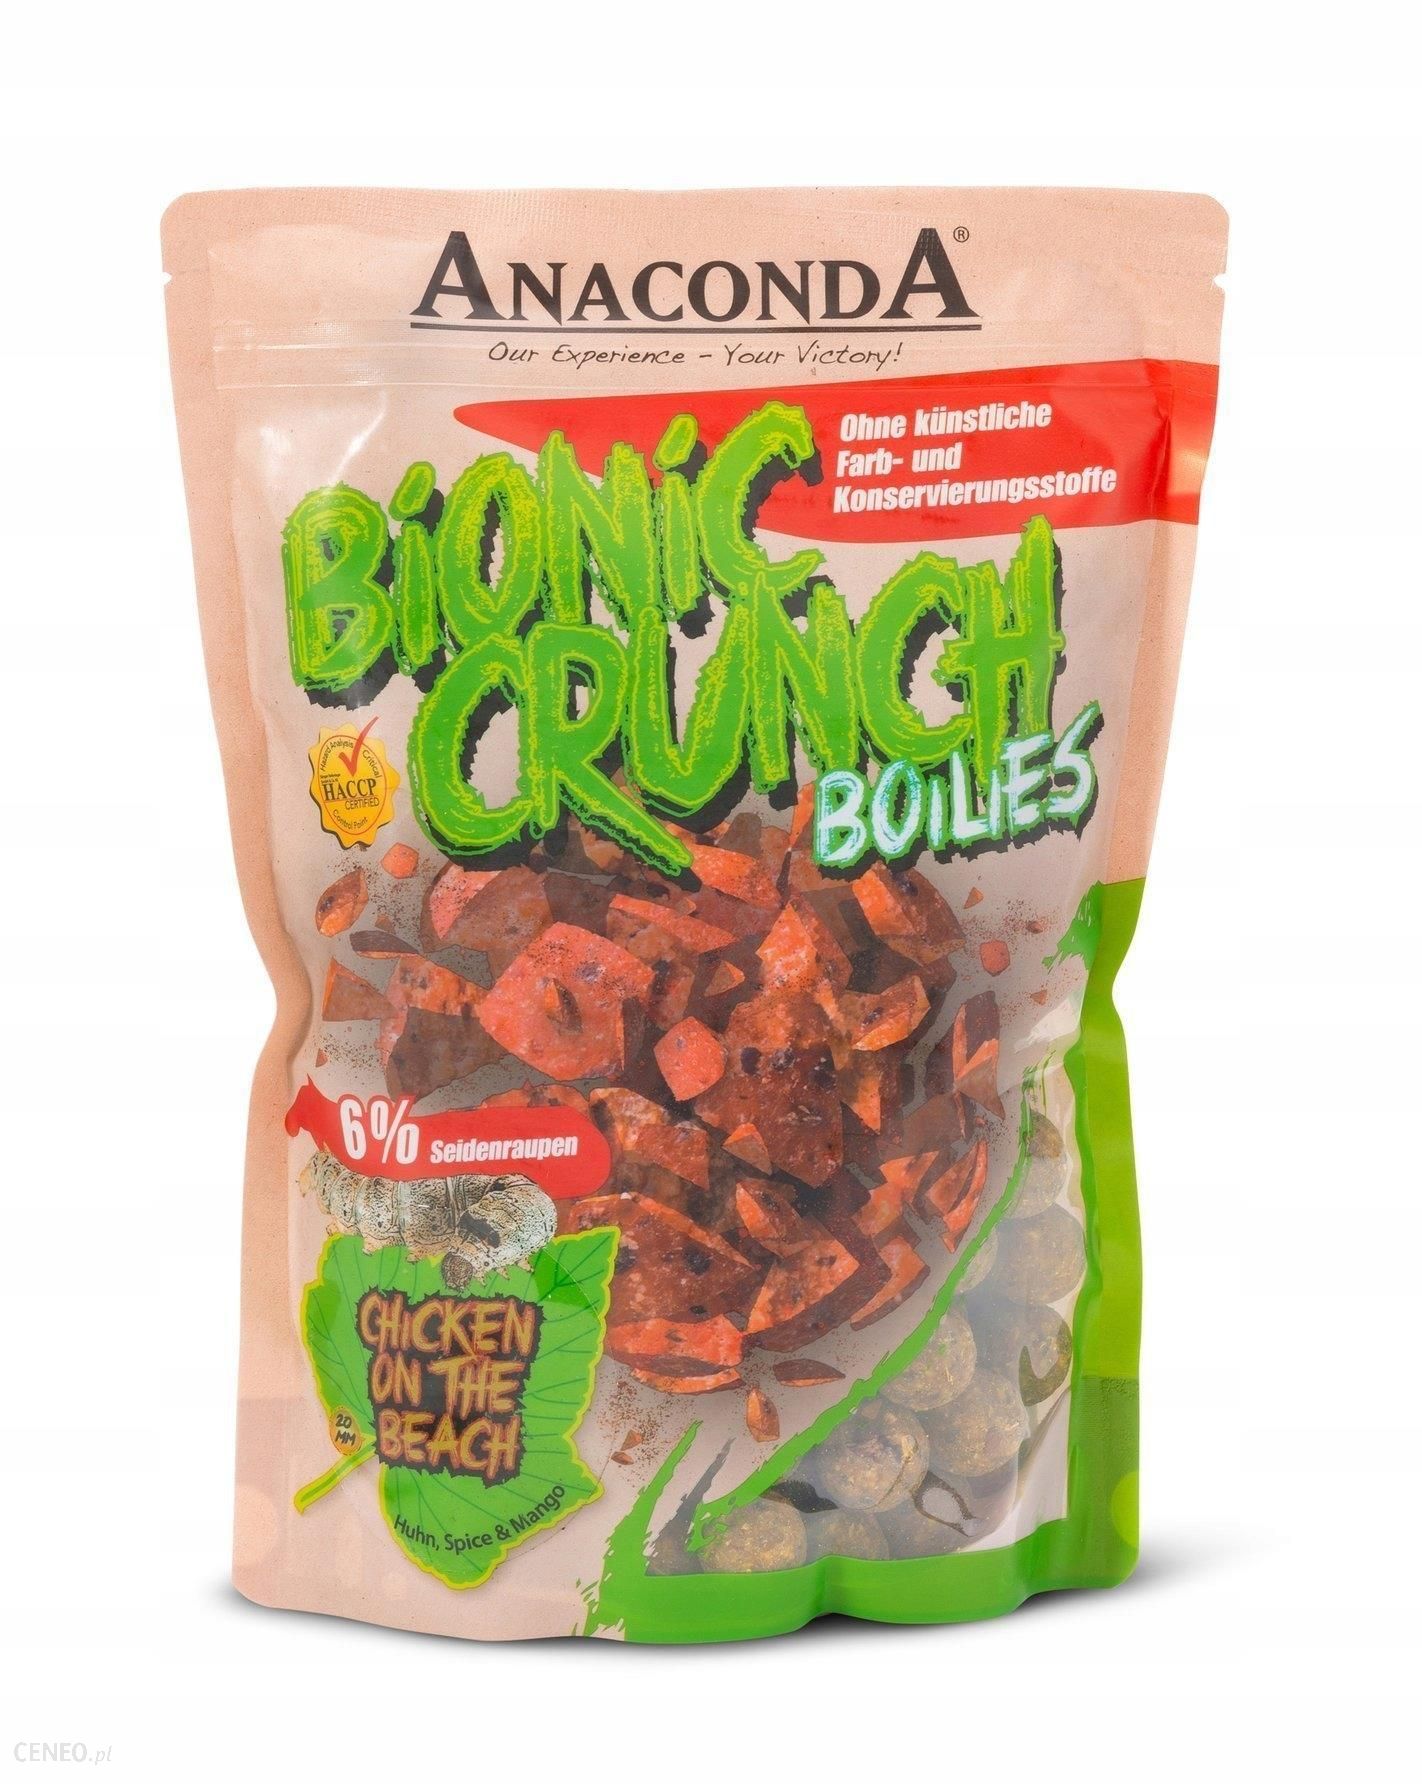 Anaconda Bionic Crunch Boilies 1 kg, 20 mm Scopex